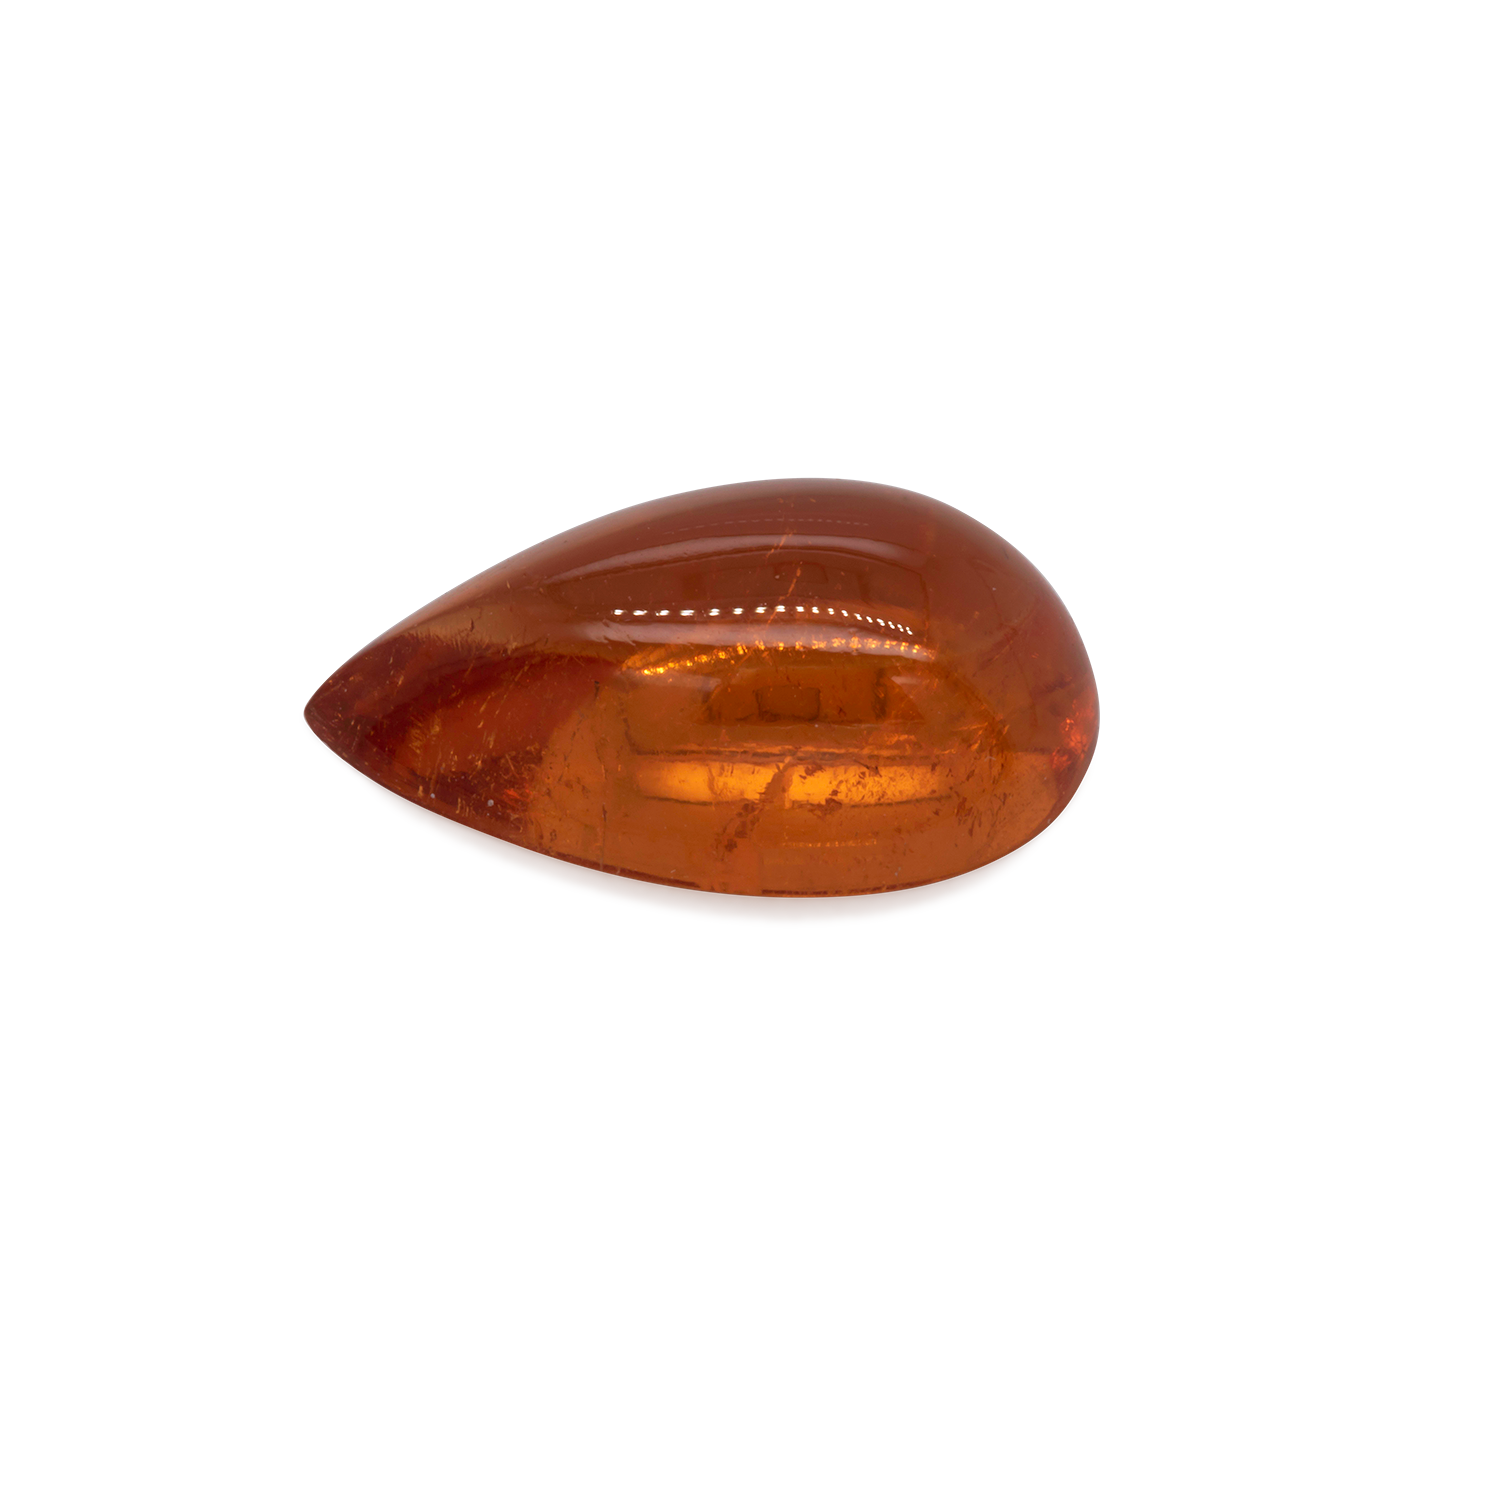 Mandarin Granat - orange, birnform, 12,2x7,5 mm, 4,06 cts, Nr. MG99041